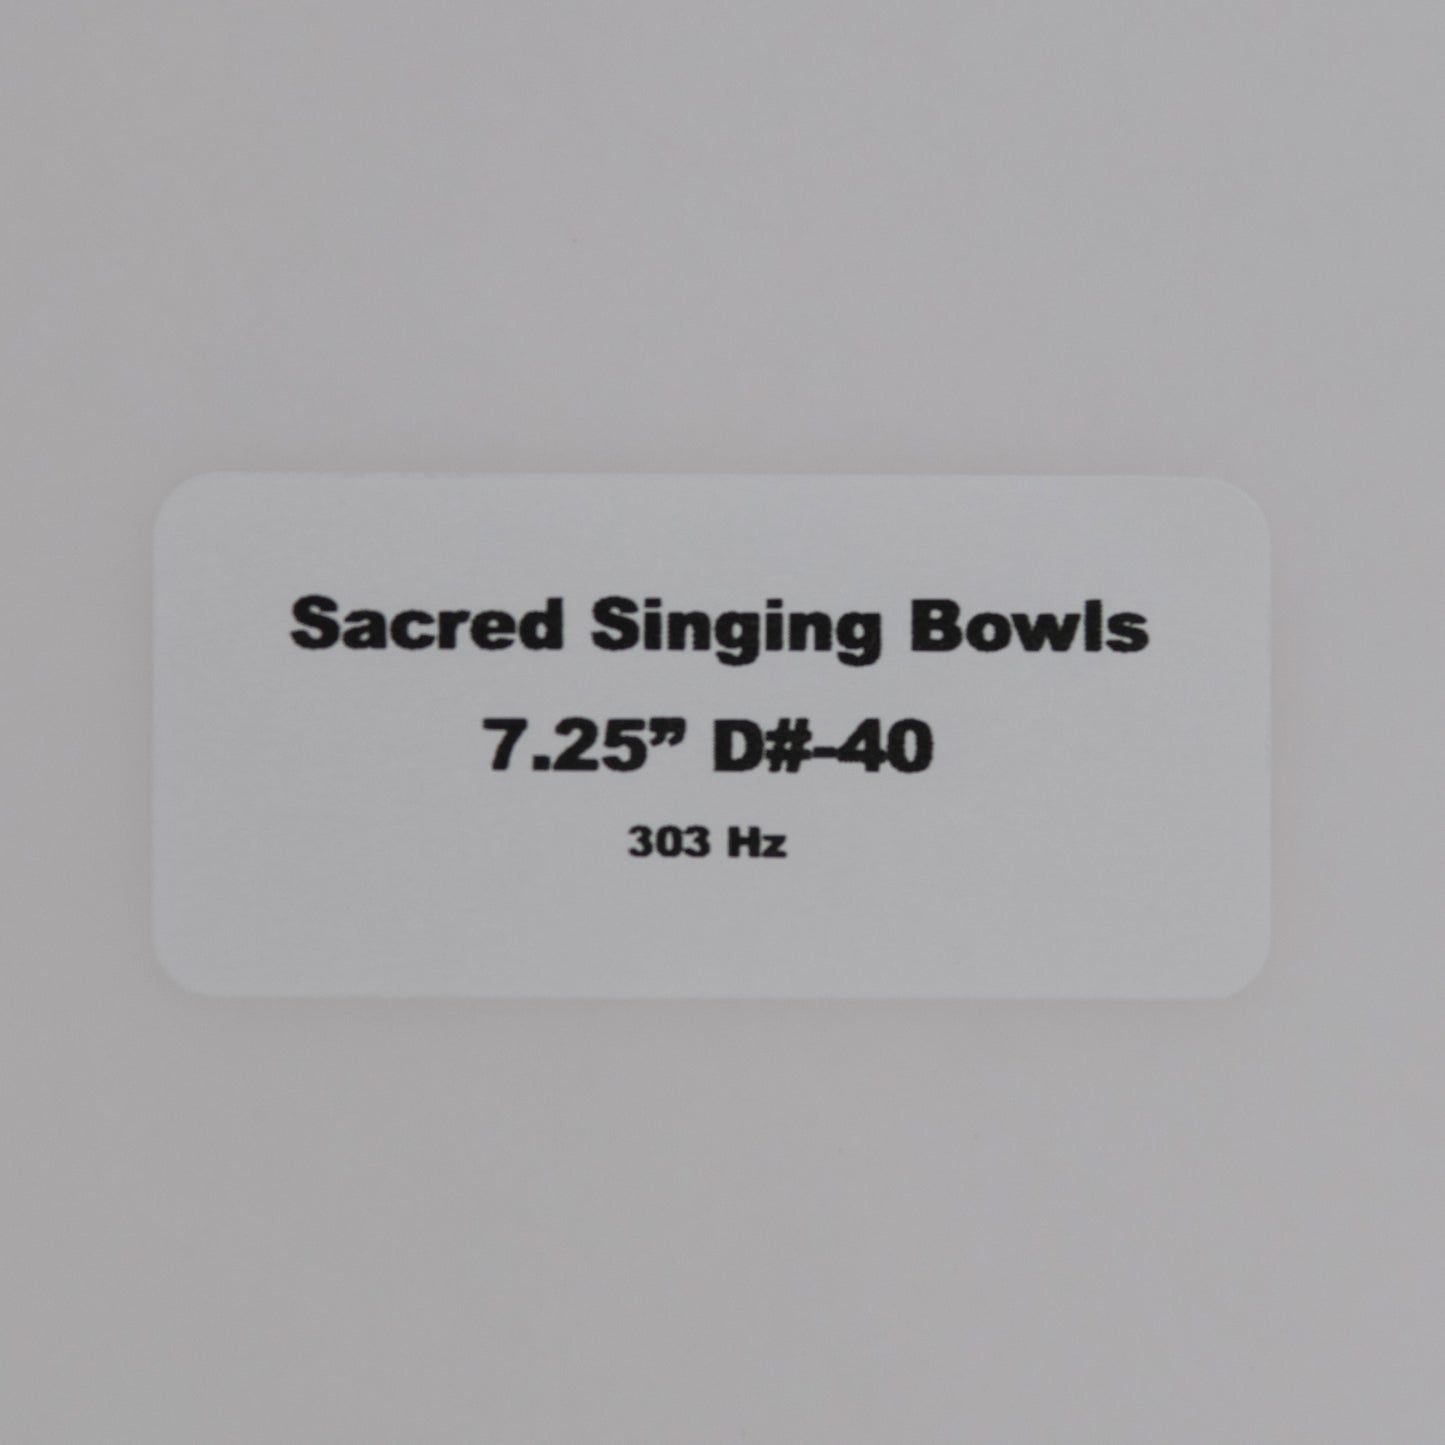 7.25" D#-40 White Light Quartz Crystal Singing Bowl, Sacred Singing Bowls